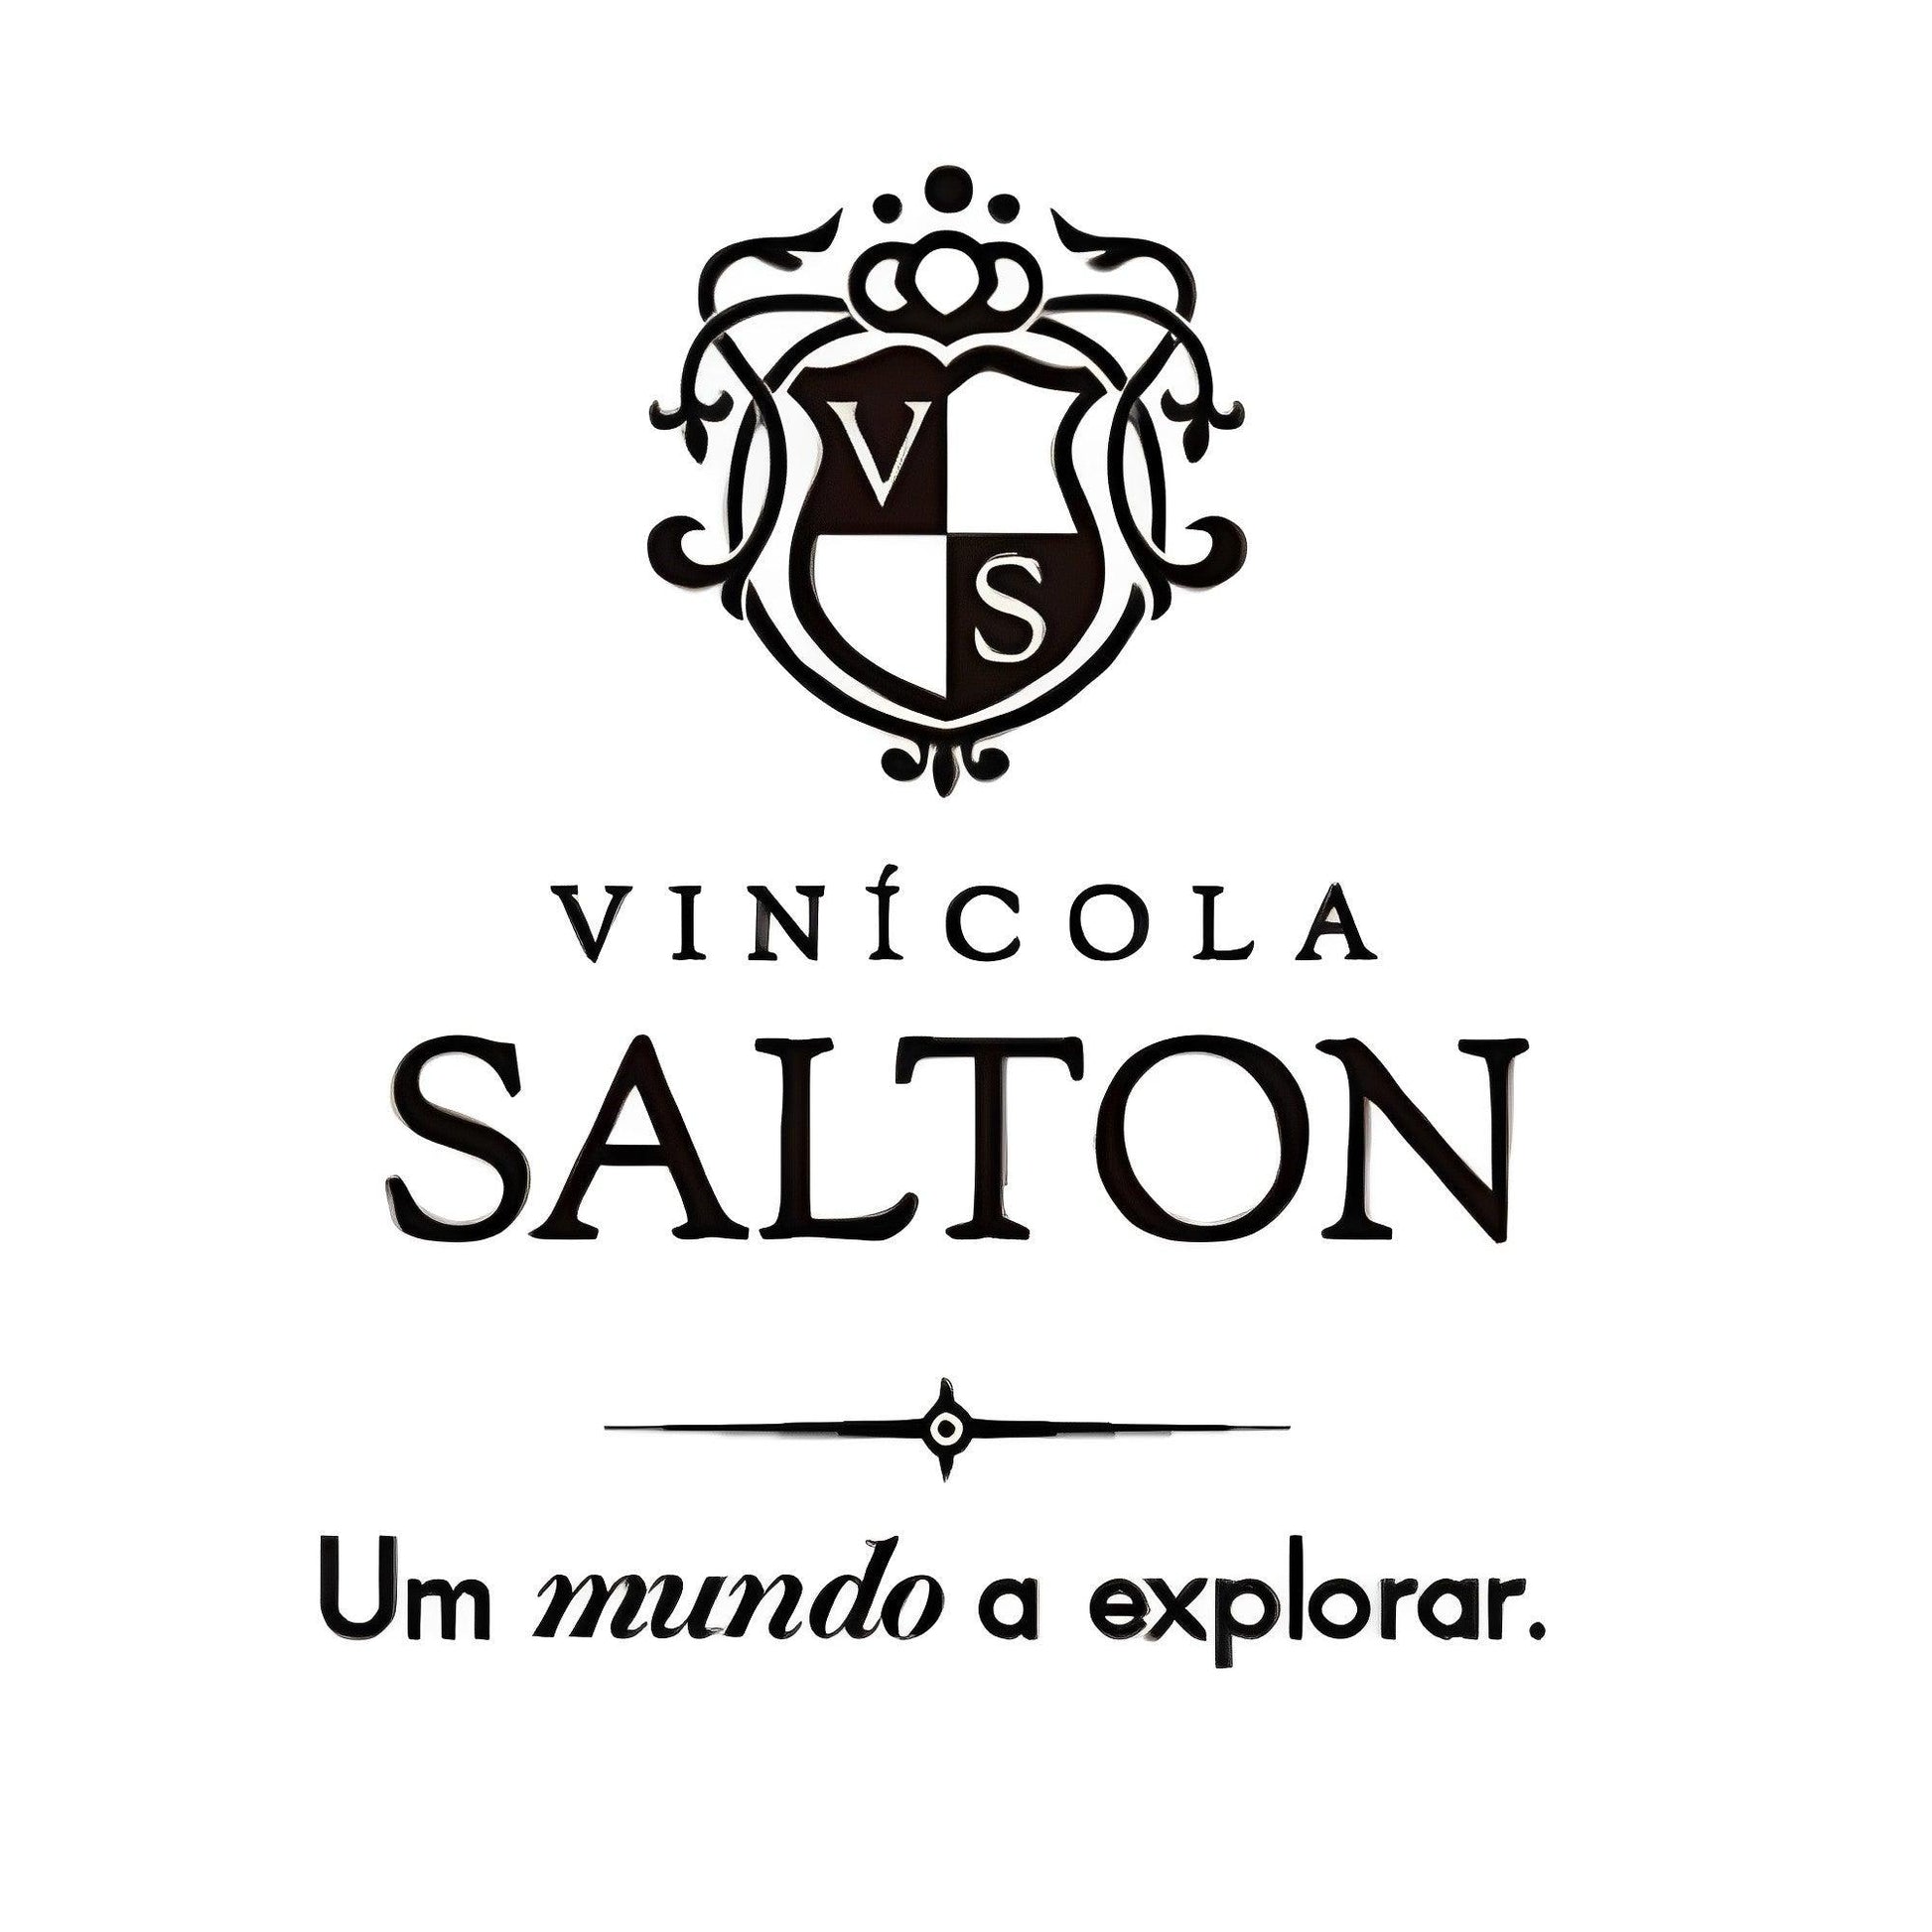 Salton Classic Trivarietal Sweet Red Wine 750ml - Serra Gaúcha - Brazilian Shop